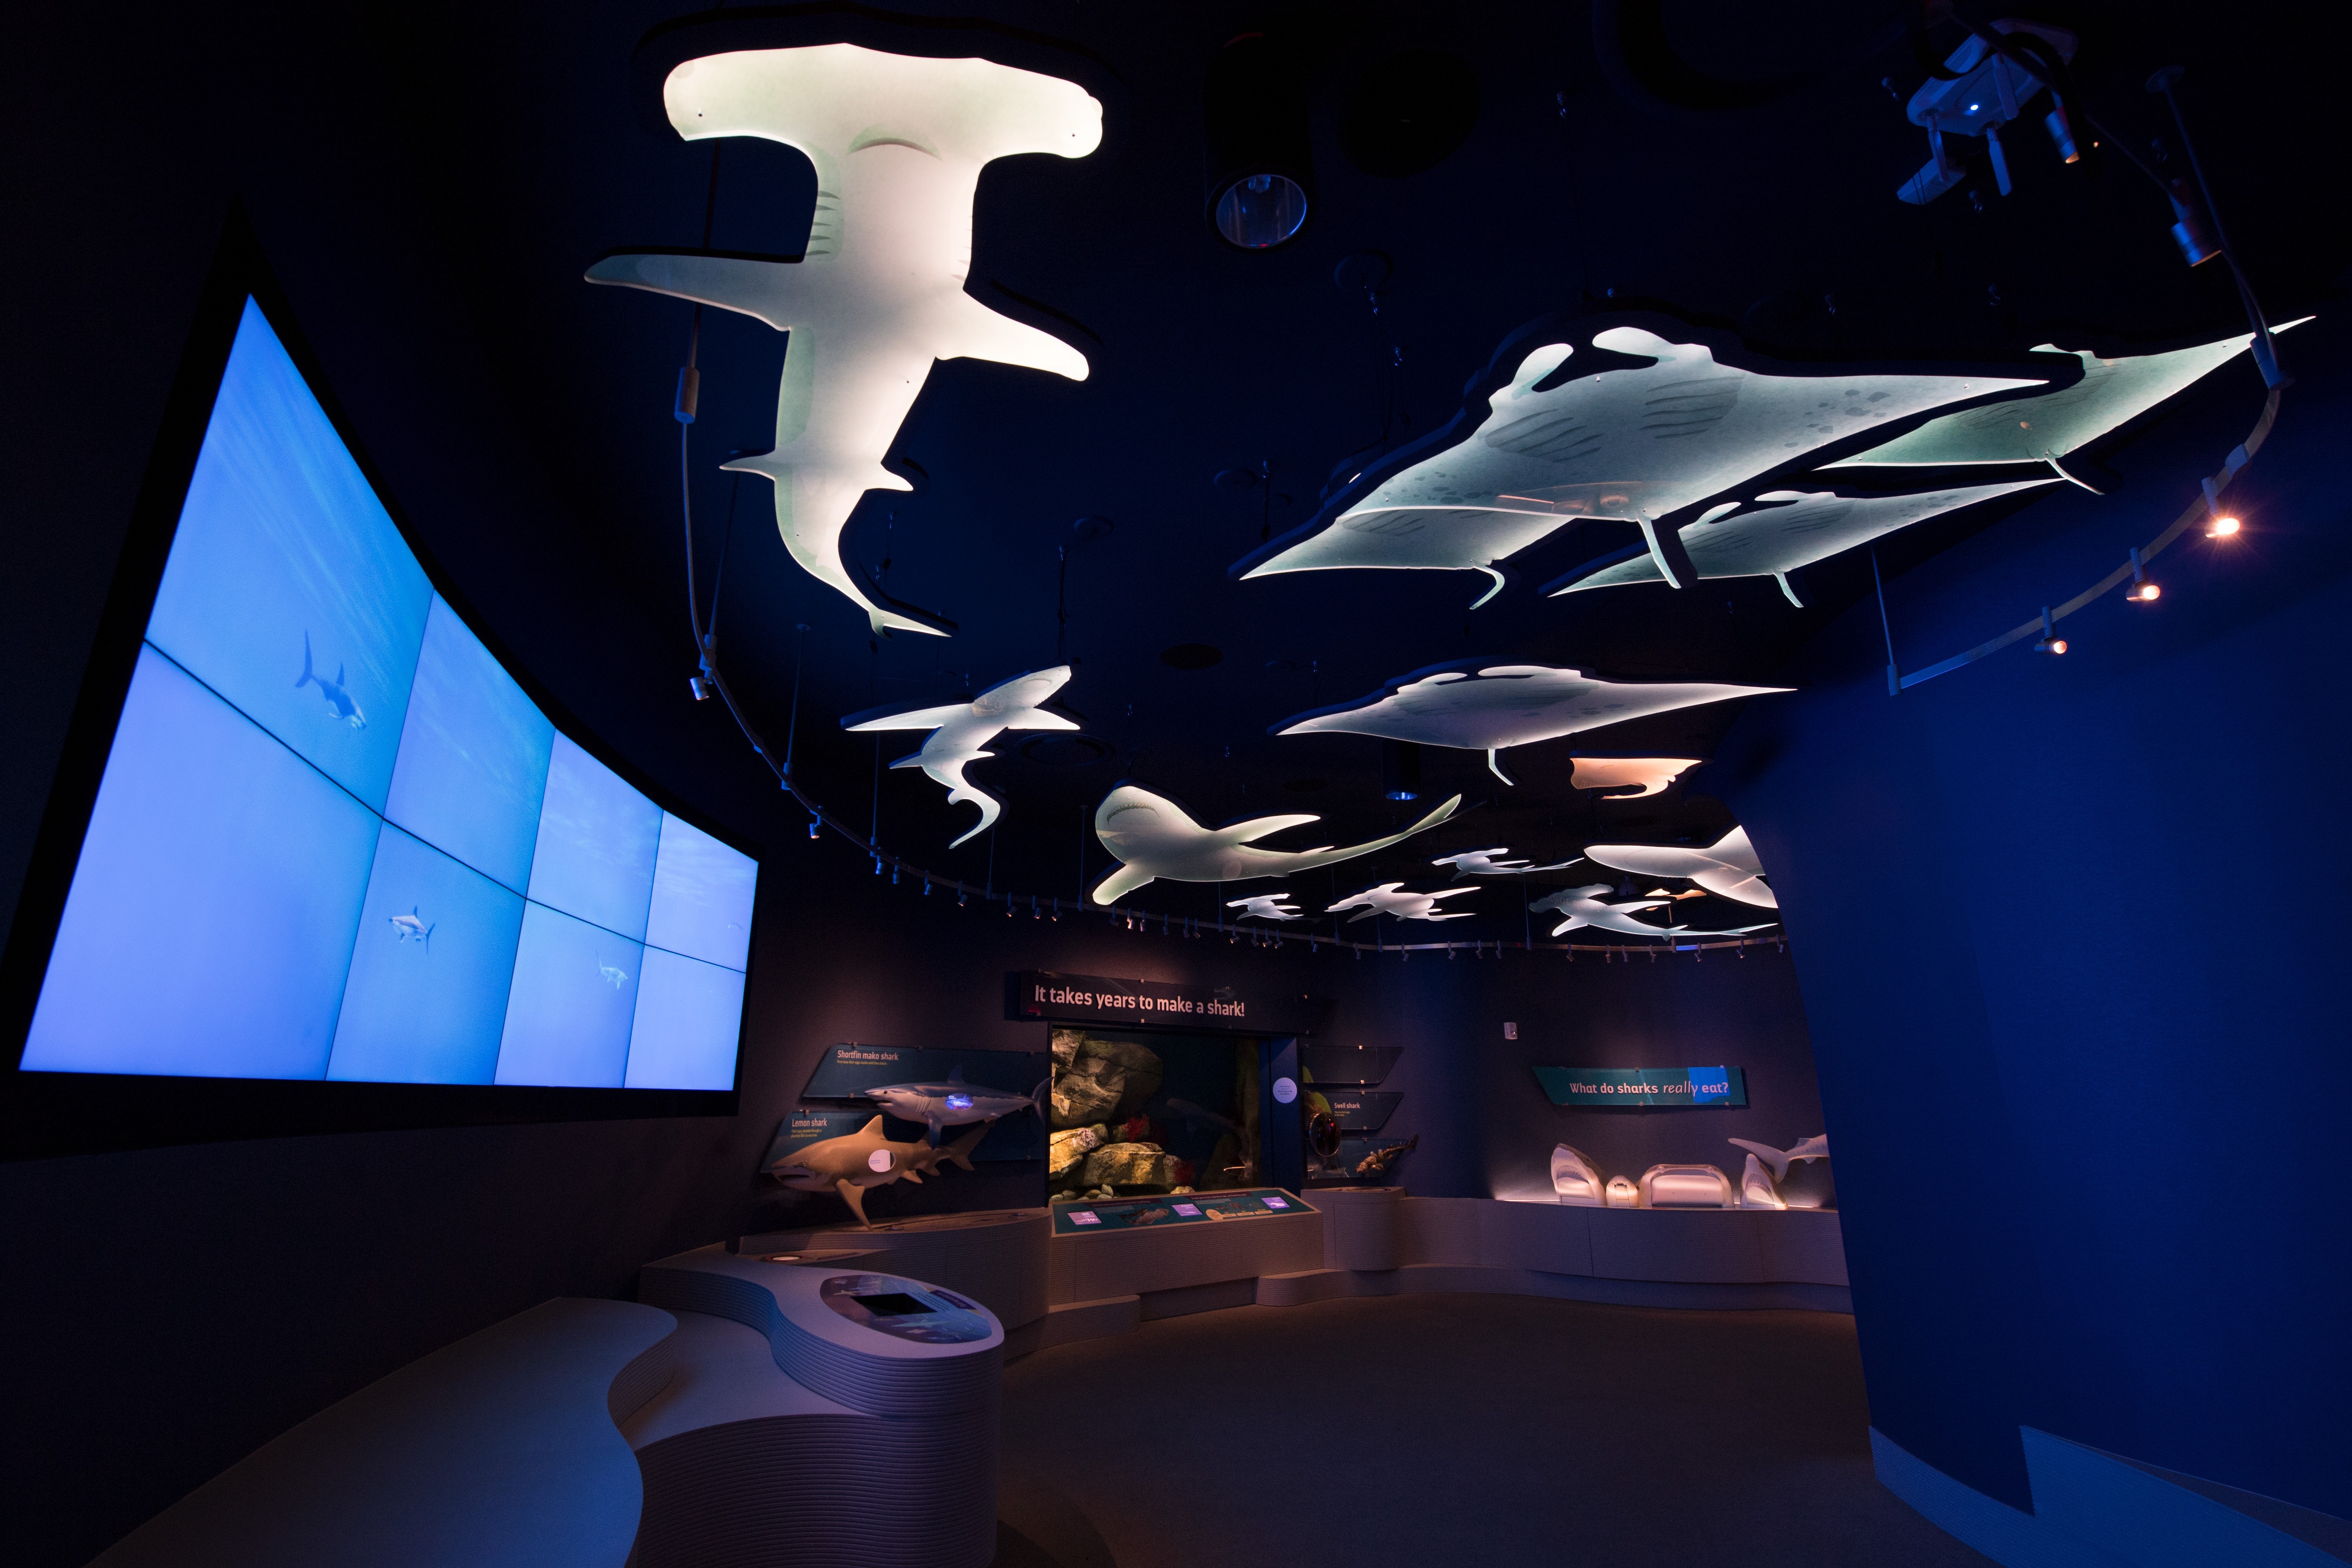 NY Aquarium Exhibit Hall